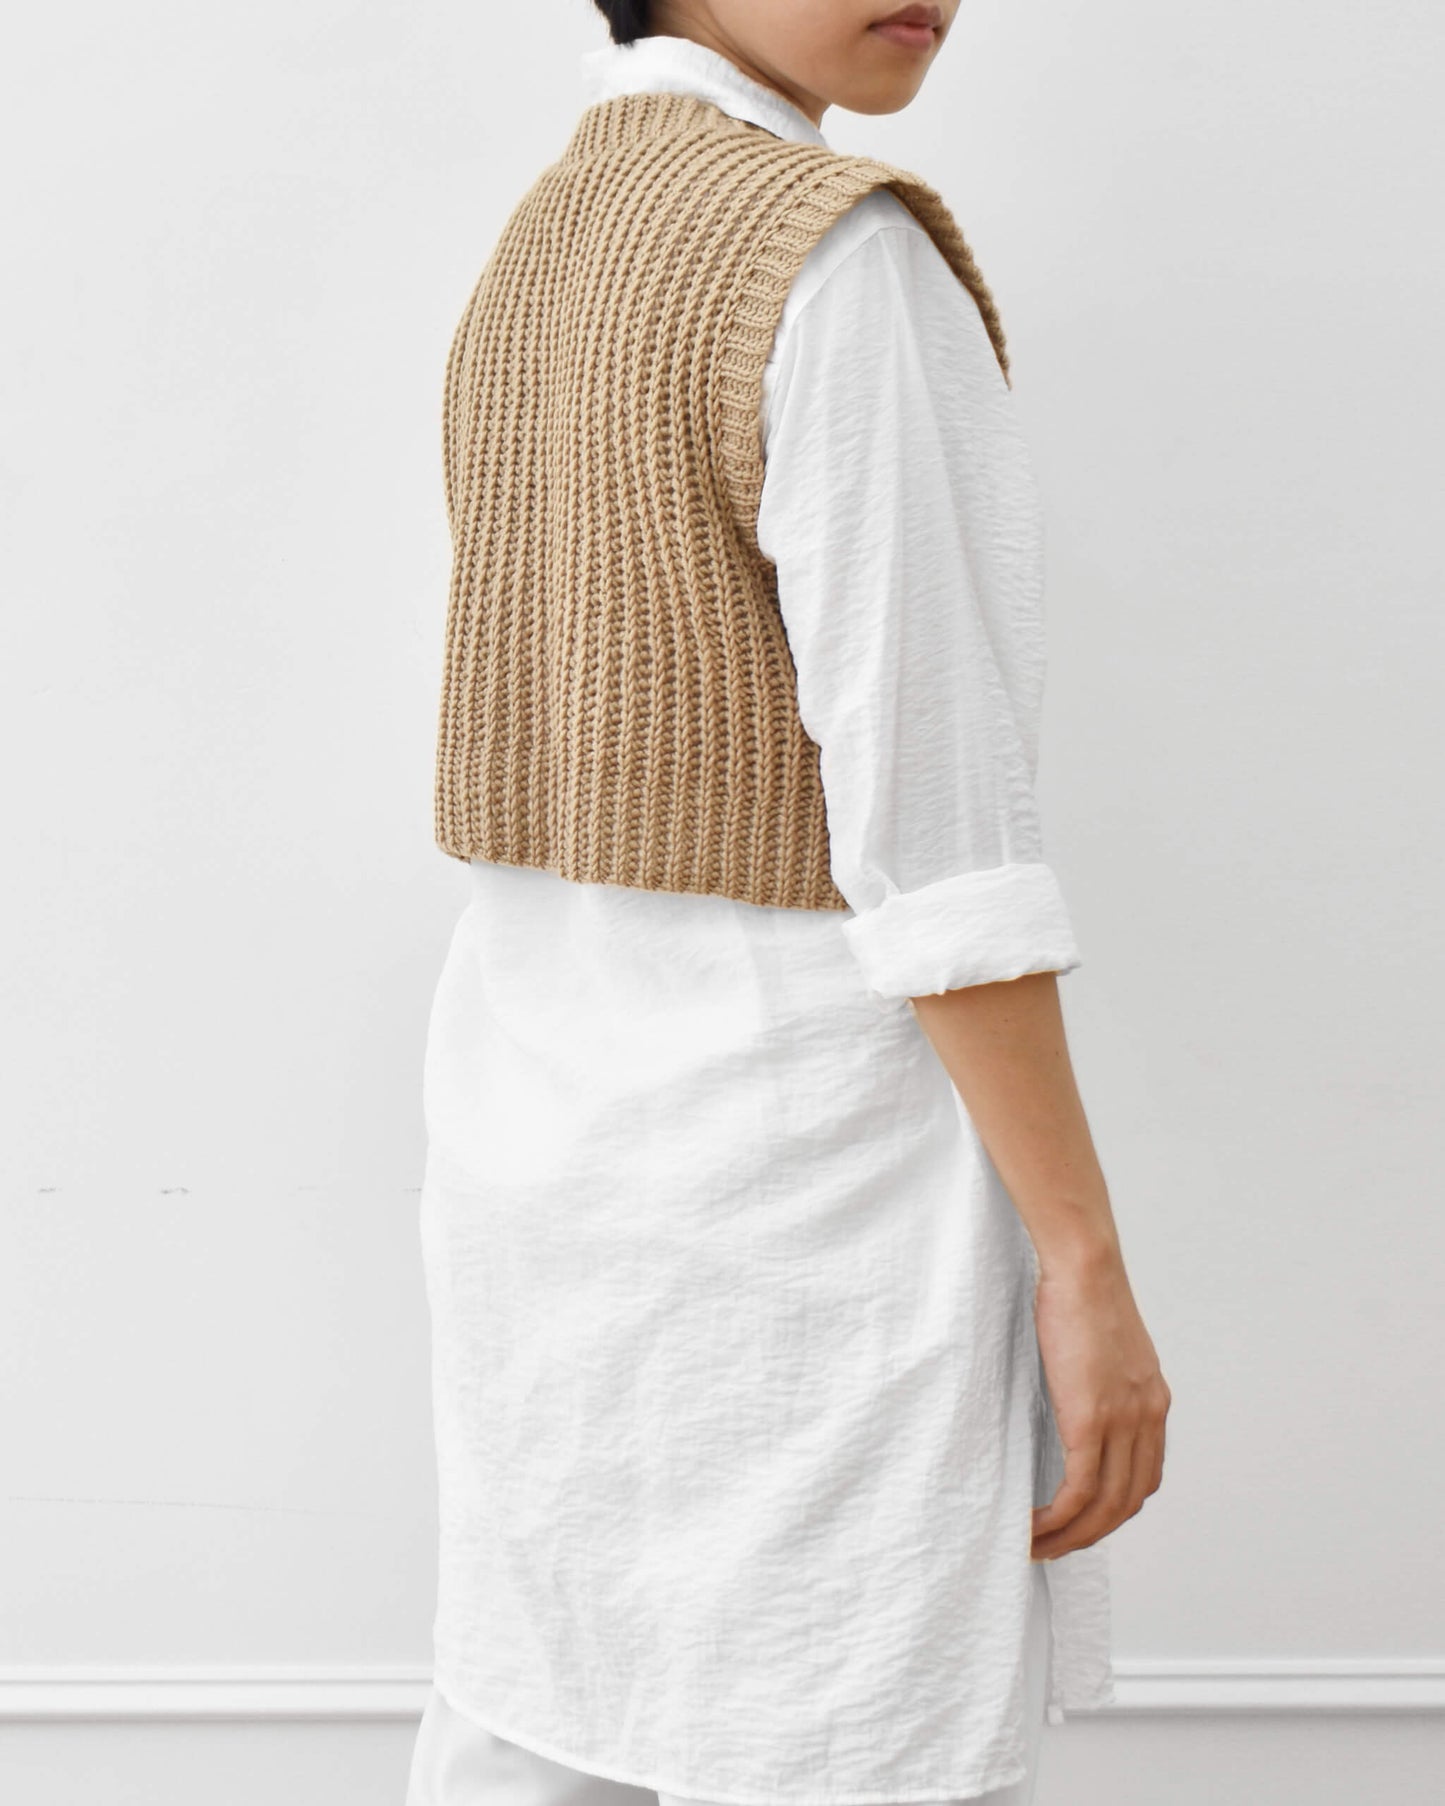 Vest No.16 | Easy crochet pattern